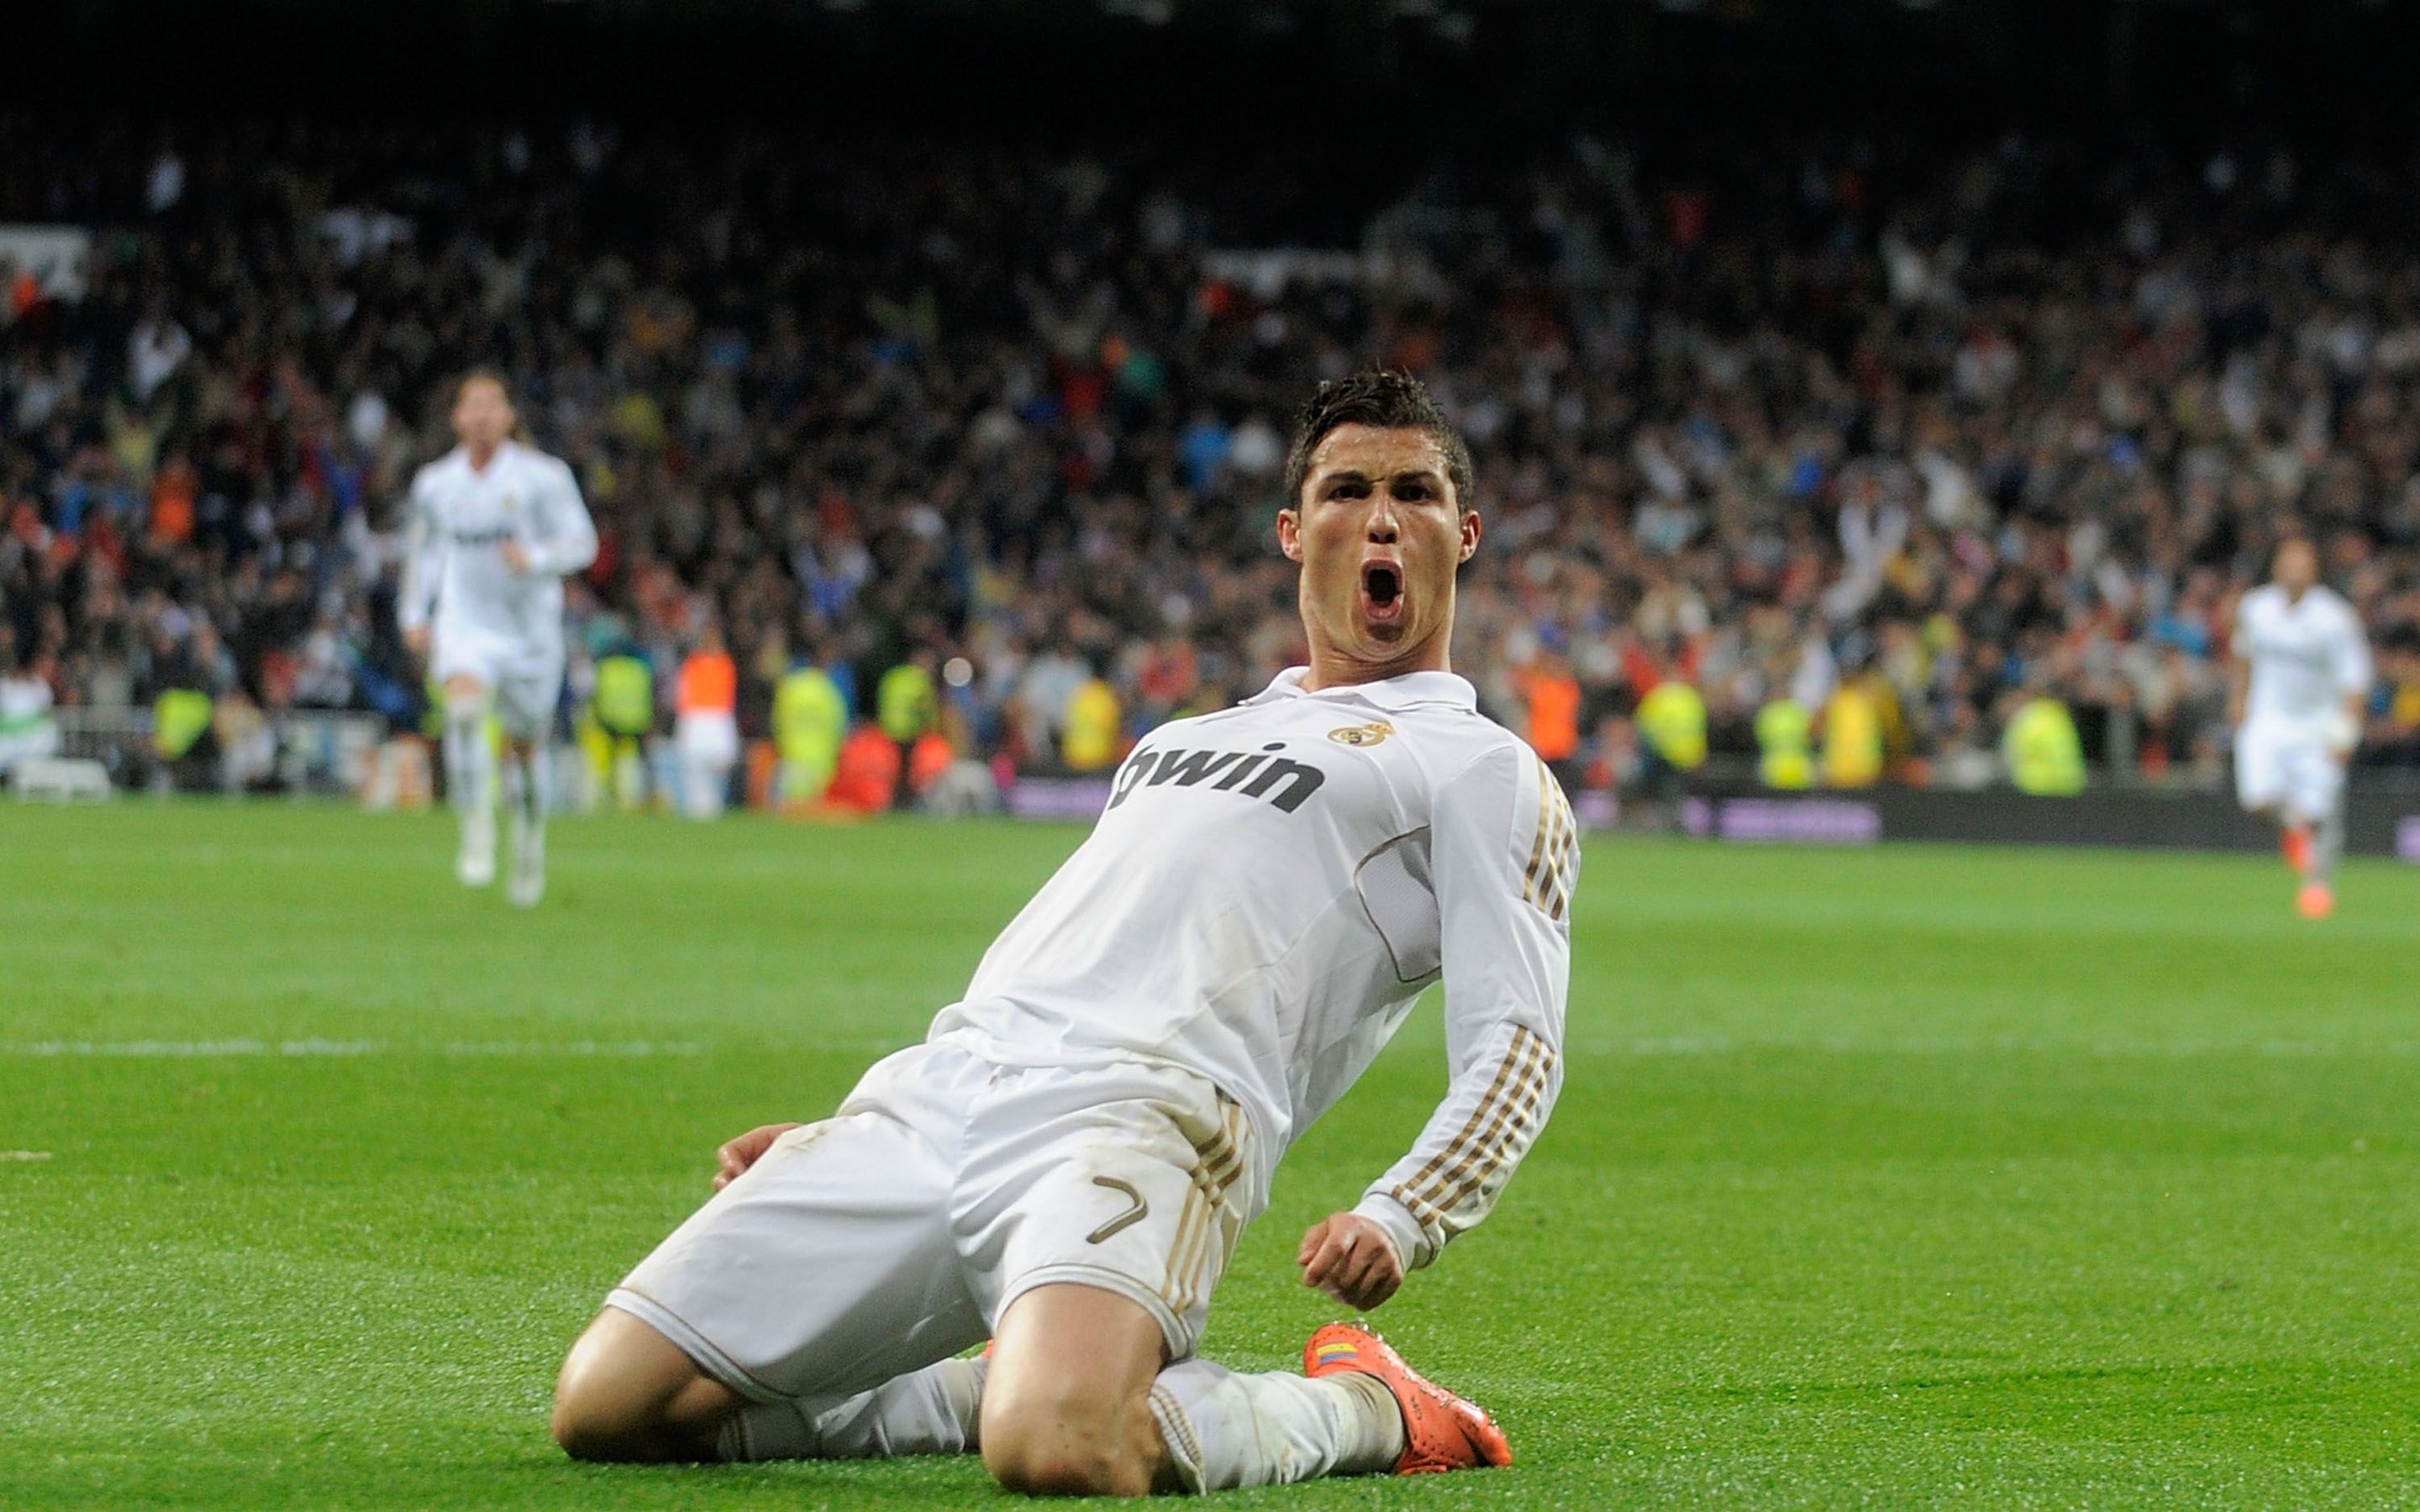 Cristiano Ronaldo Celebrating for 2880 x 1800 Retina Display resolution